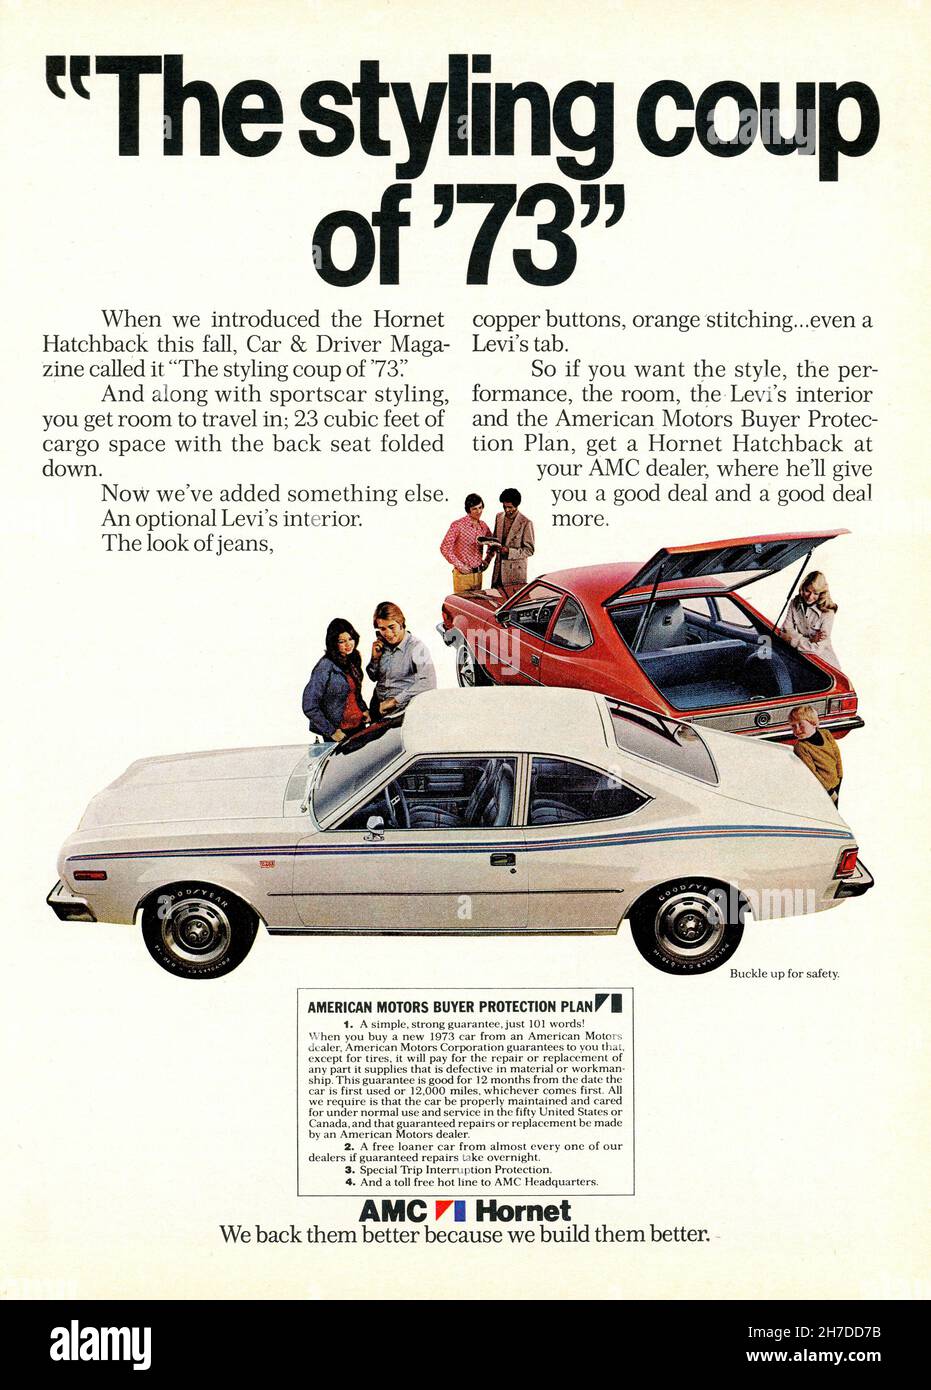 April 1973 'Playboy' magazine advertisement, USA Stock Photo